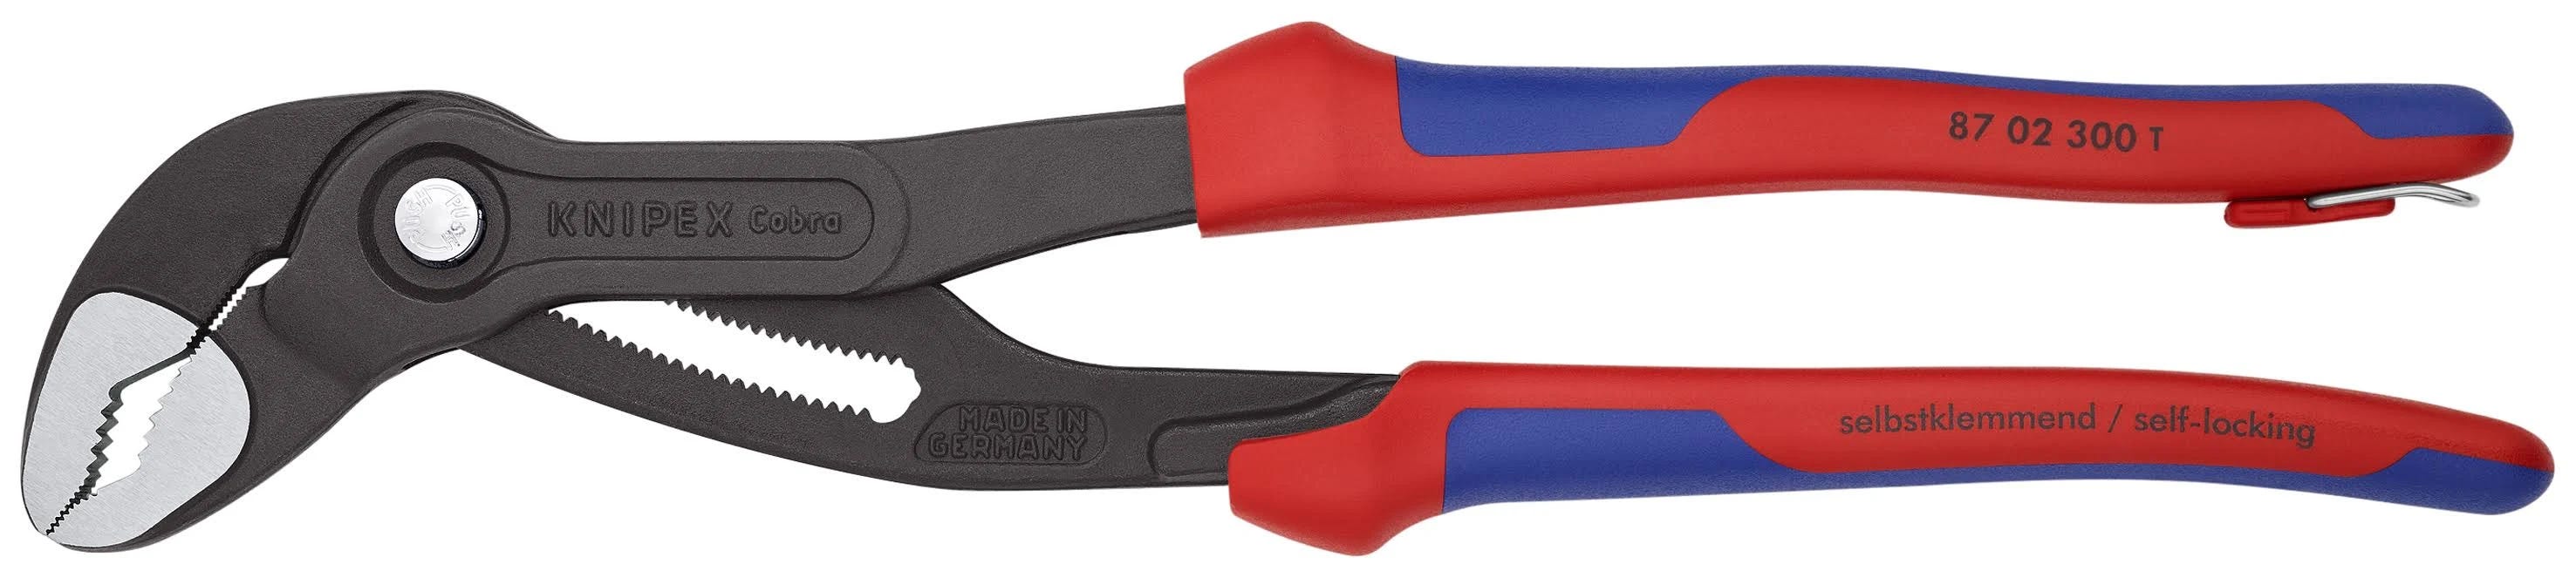 Knipex Cobra Pliers for Precision Handling | Image